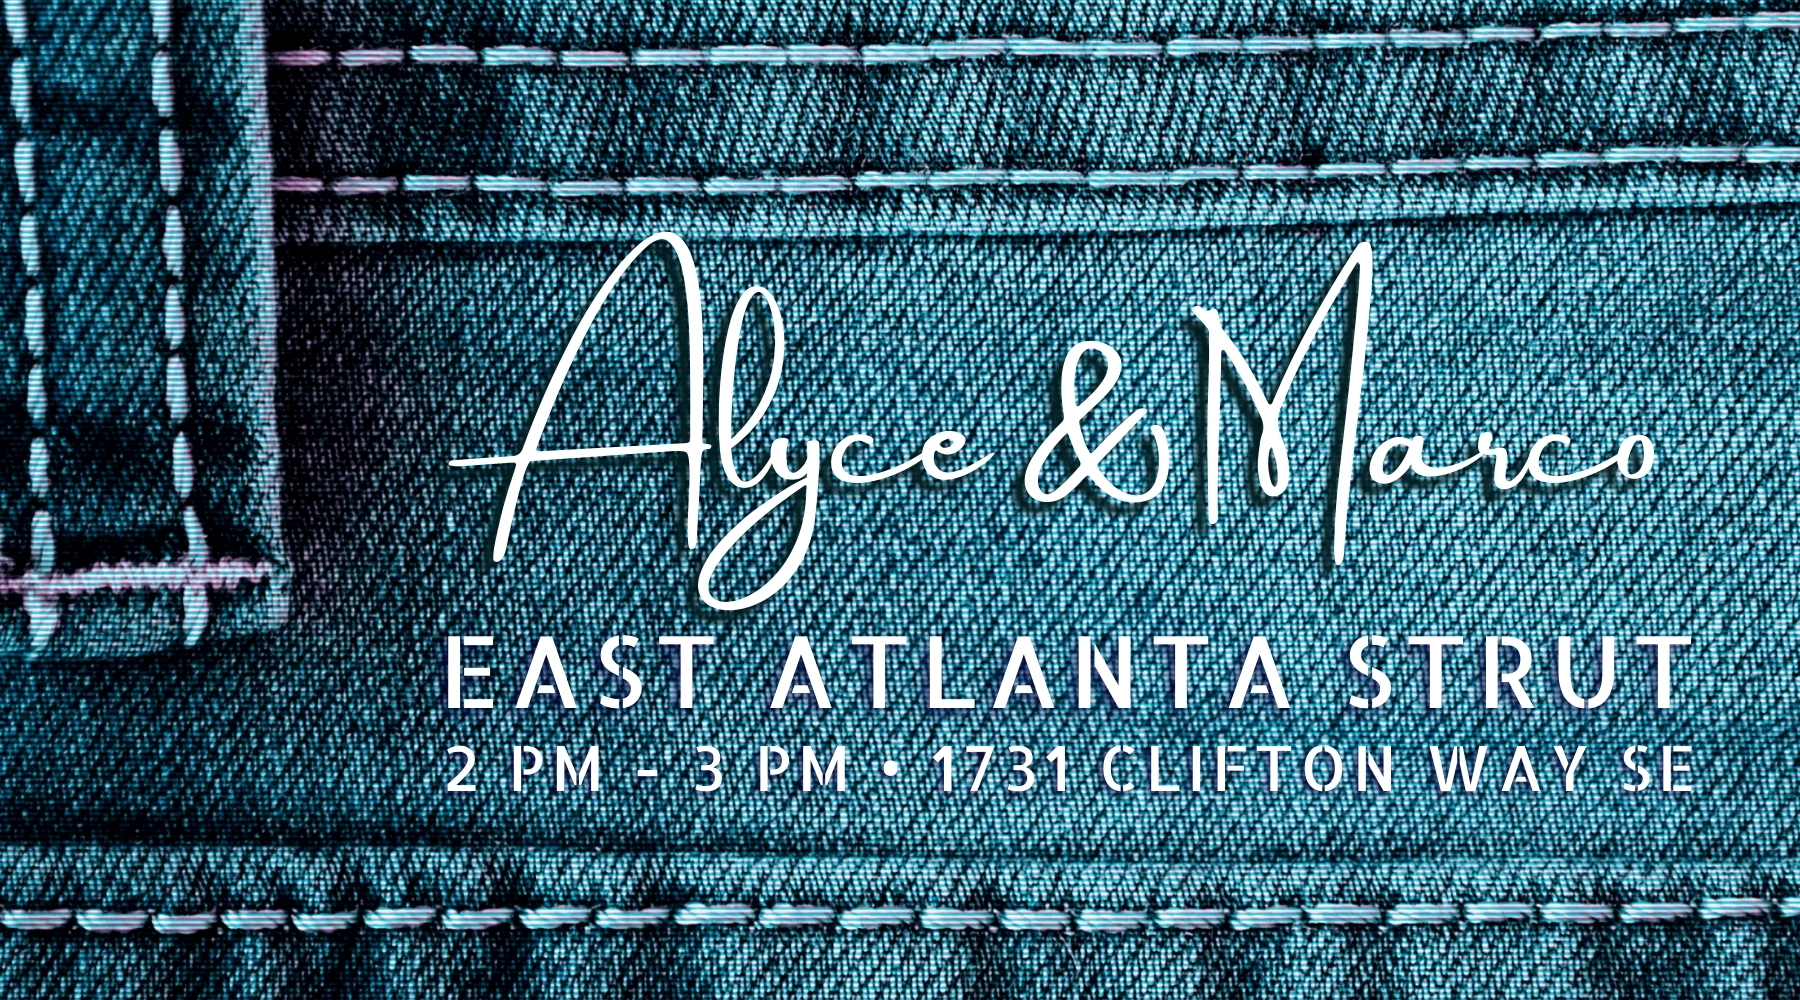 Alyce-and-Marco-East-Atlanta-Strut